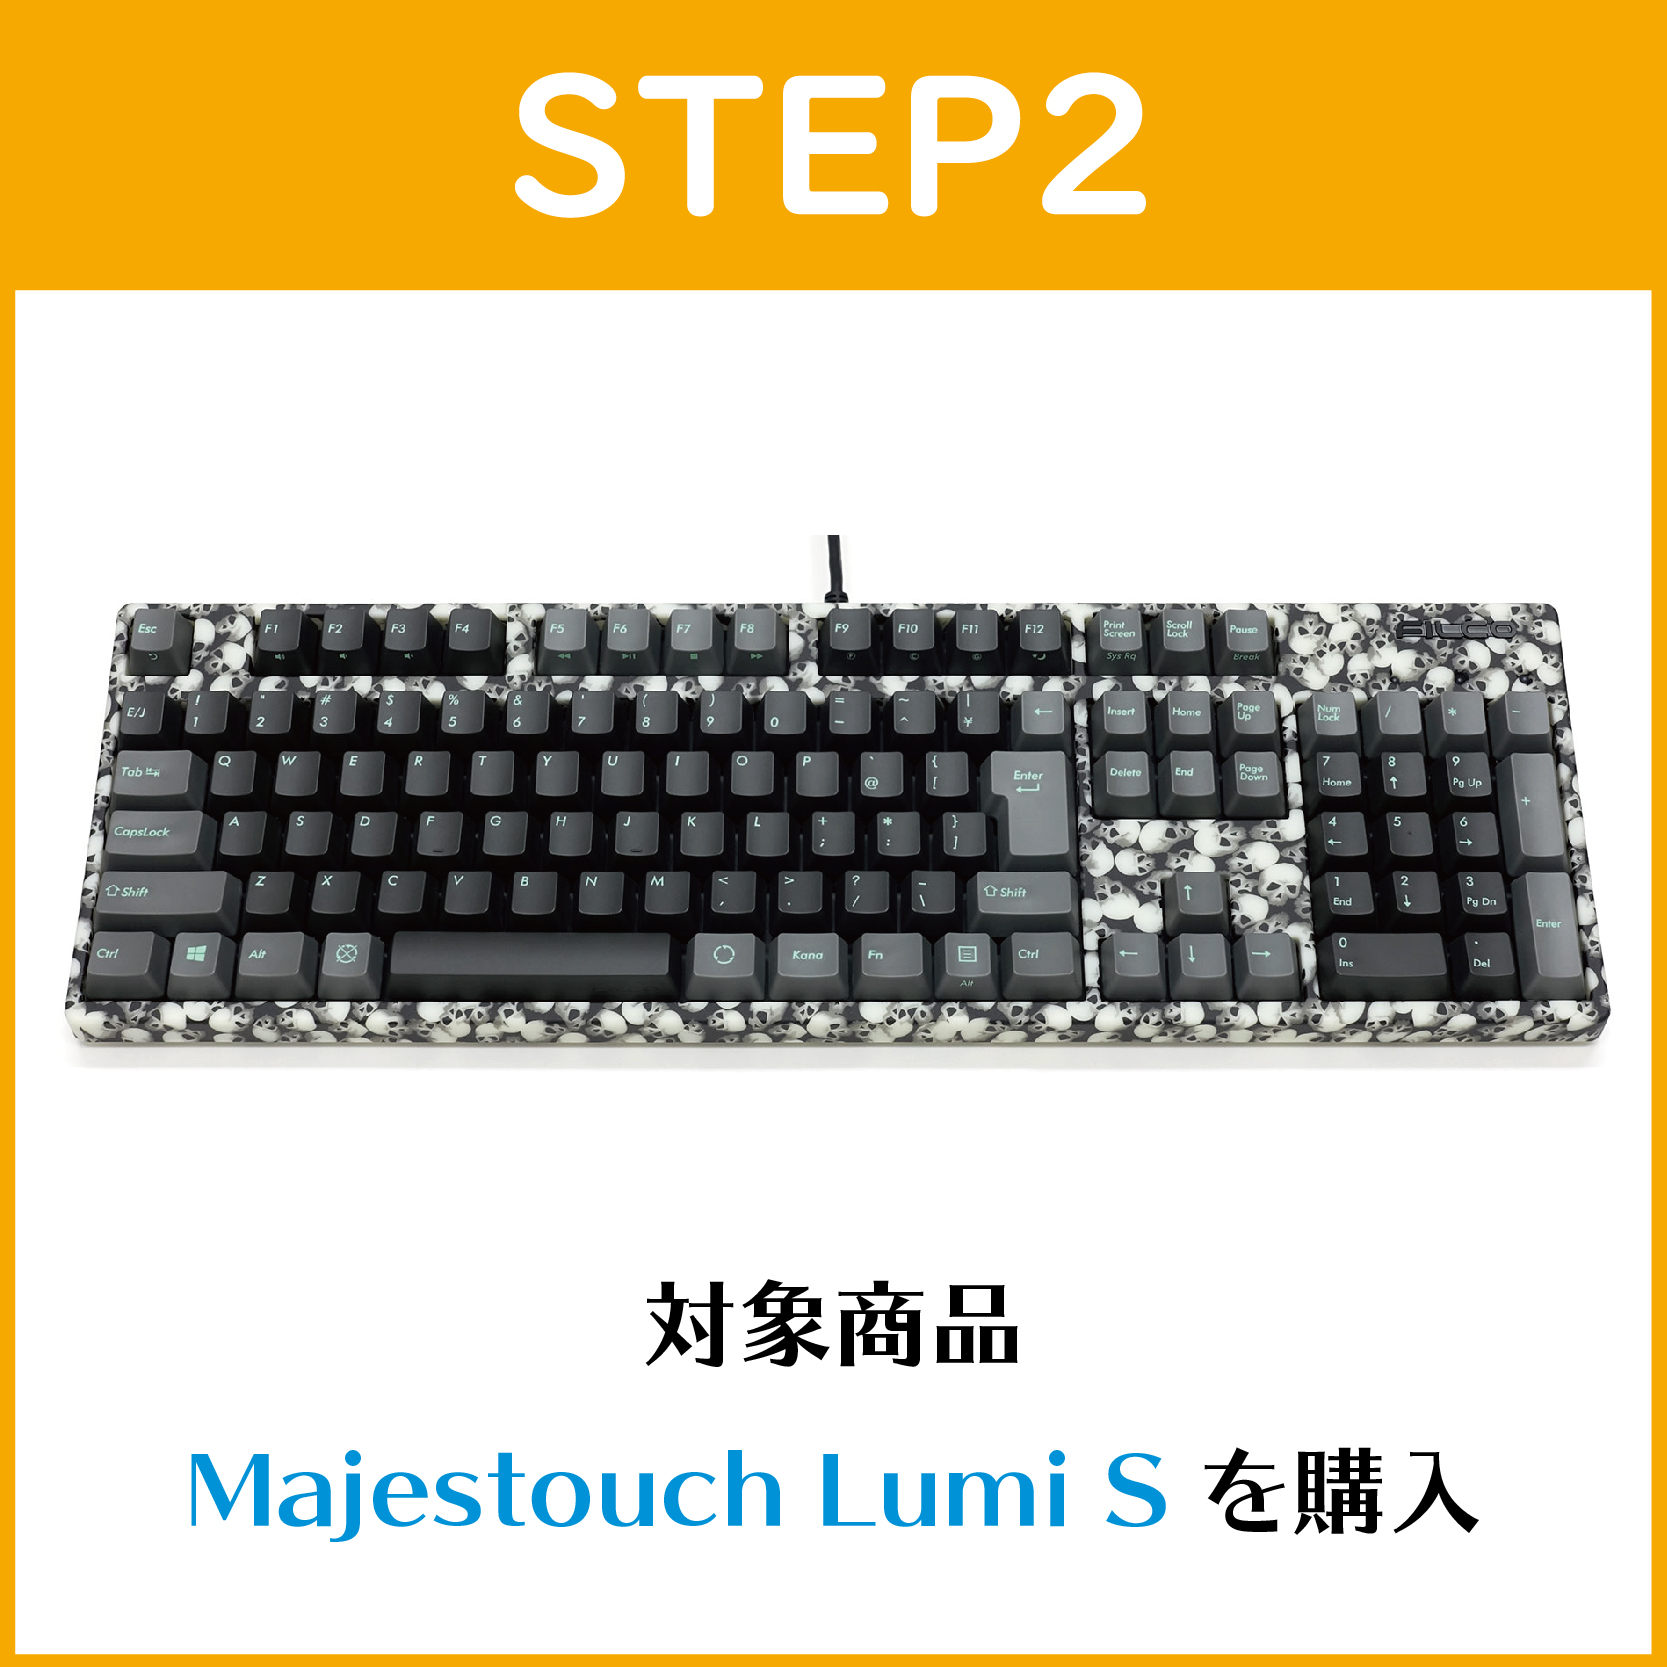 STEP2:Majestouch Lumi Sを購入